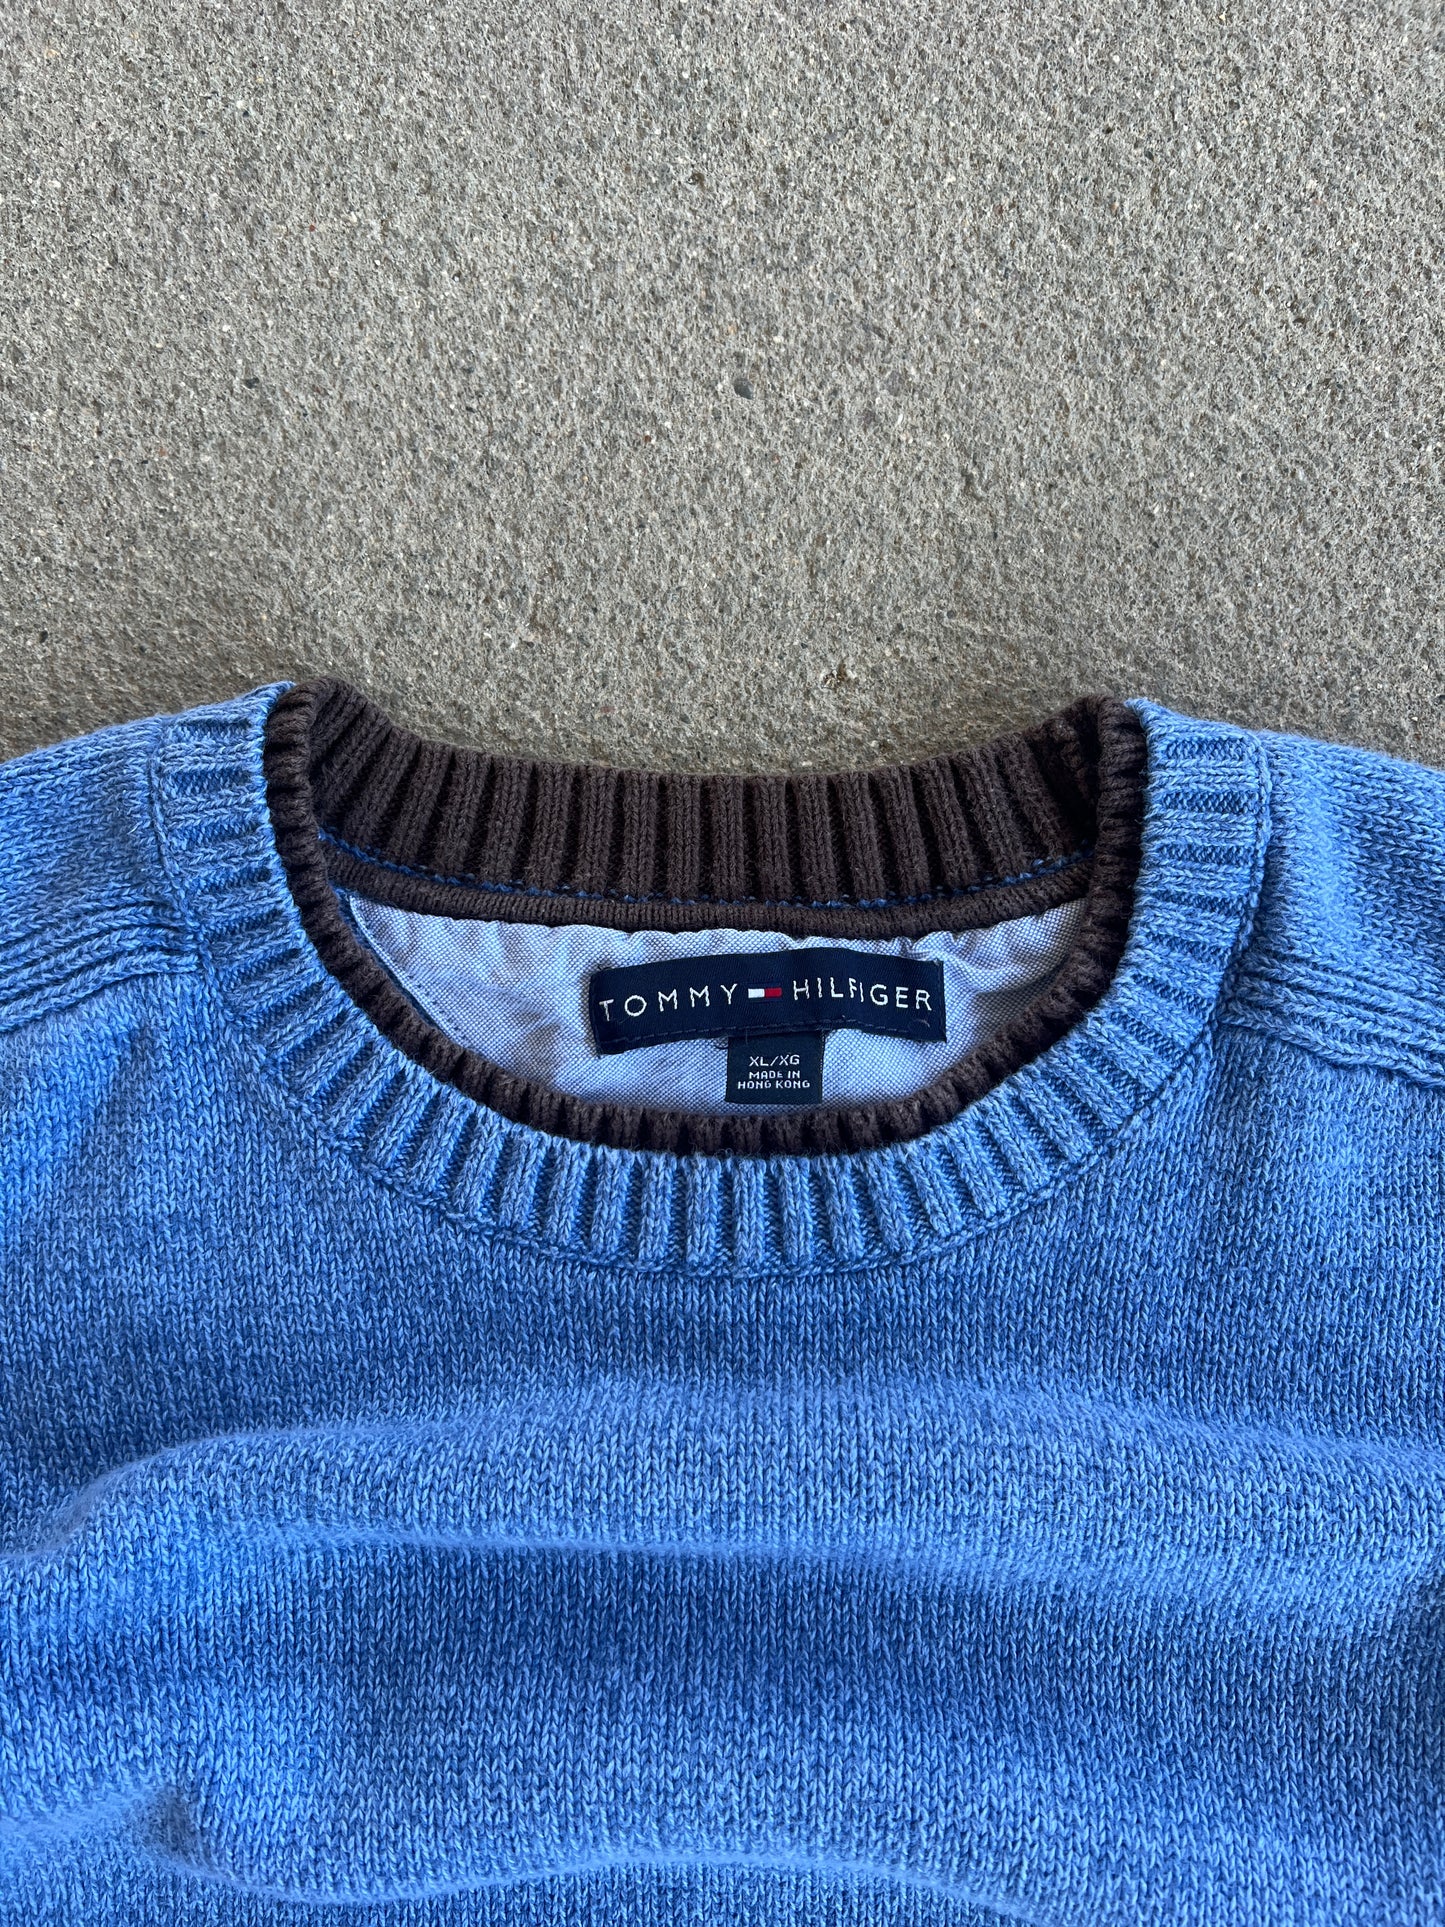 Vintage Blue Tommy Hilfiger Knit - XL